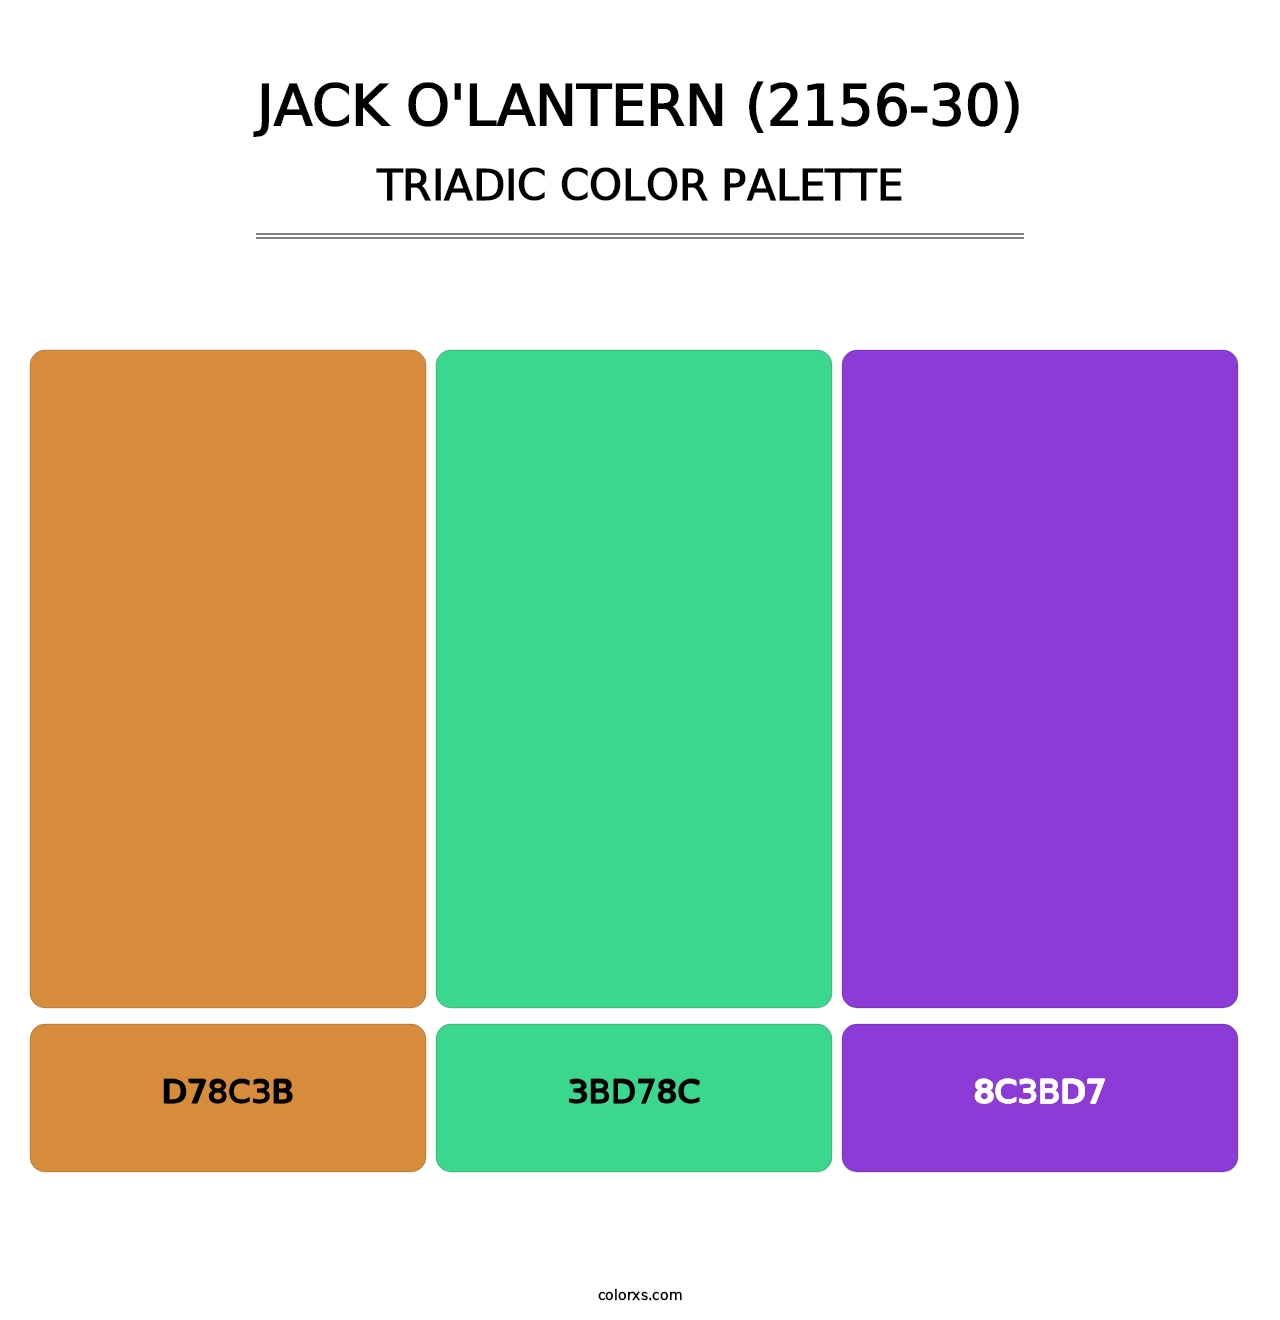 Jack O'Lantern (2156-30) - Triadic Color Palette